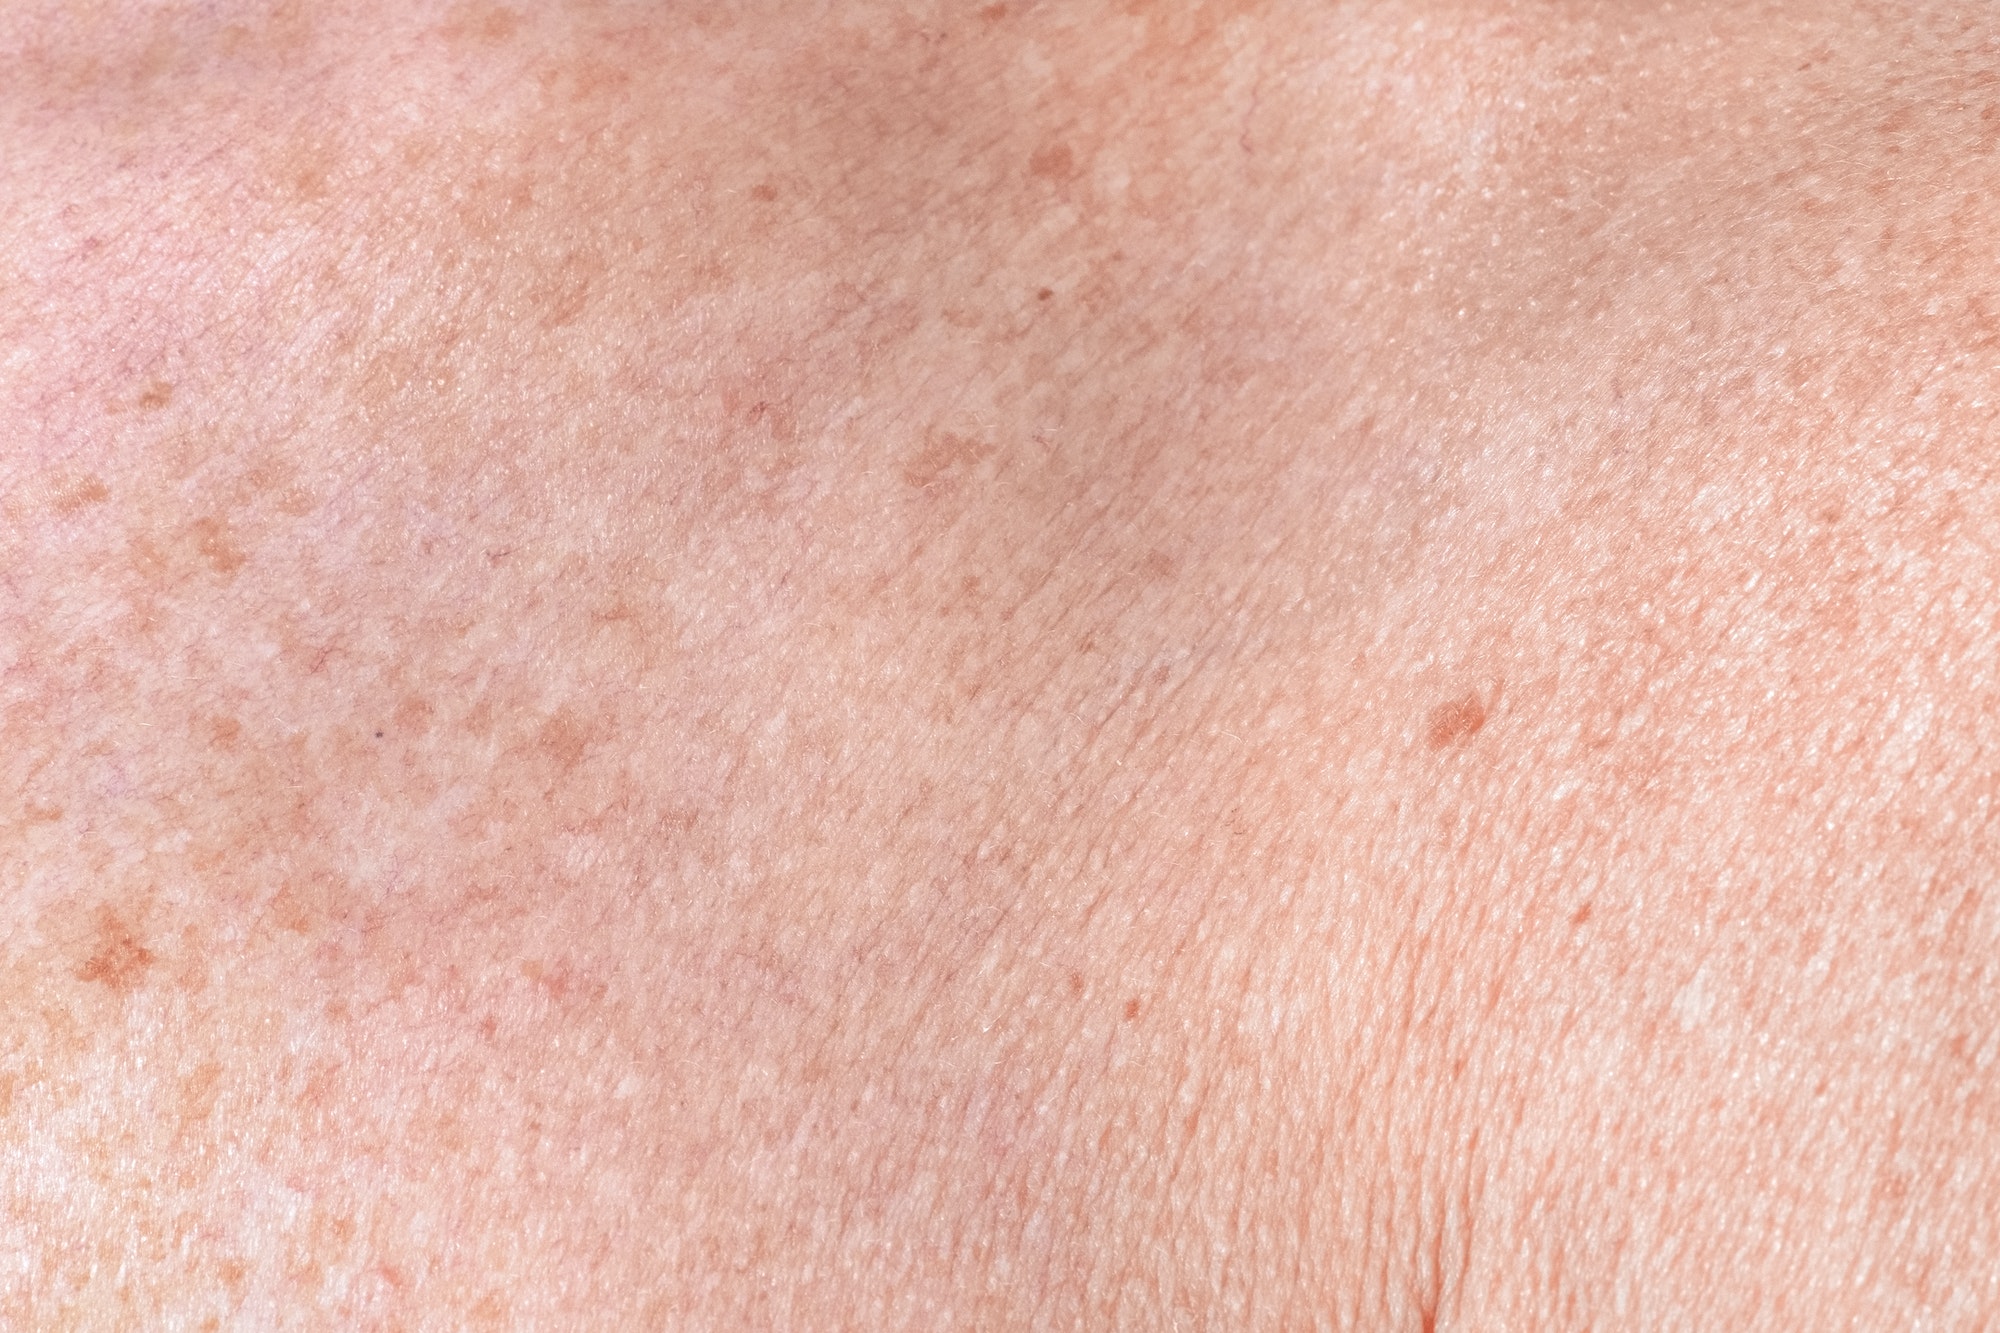 Aging female skin with melasma spots